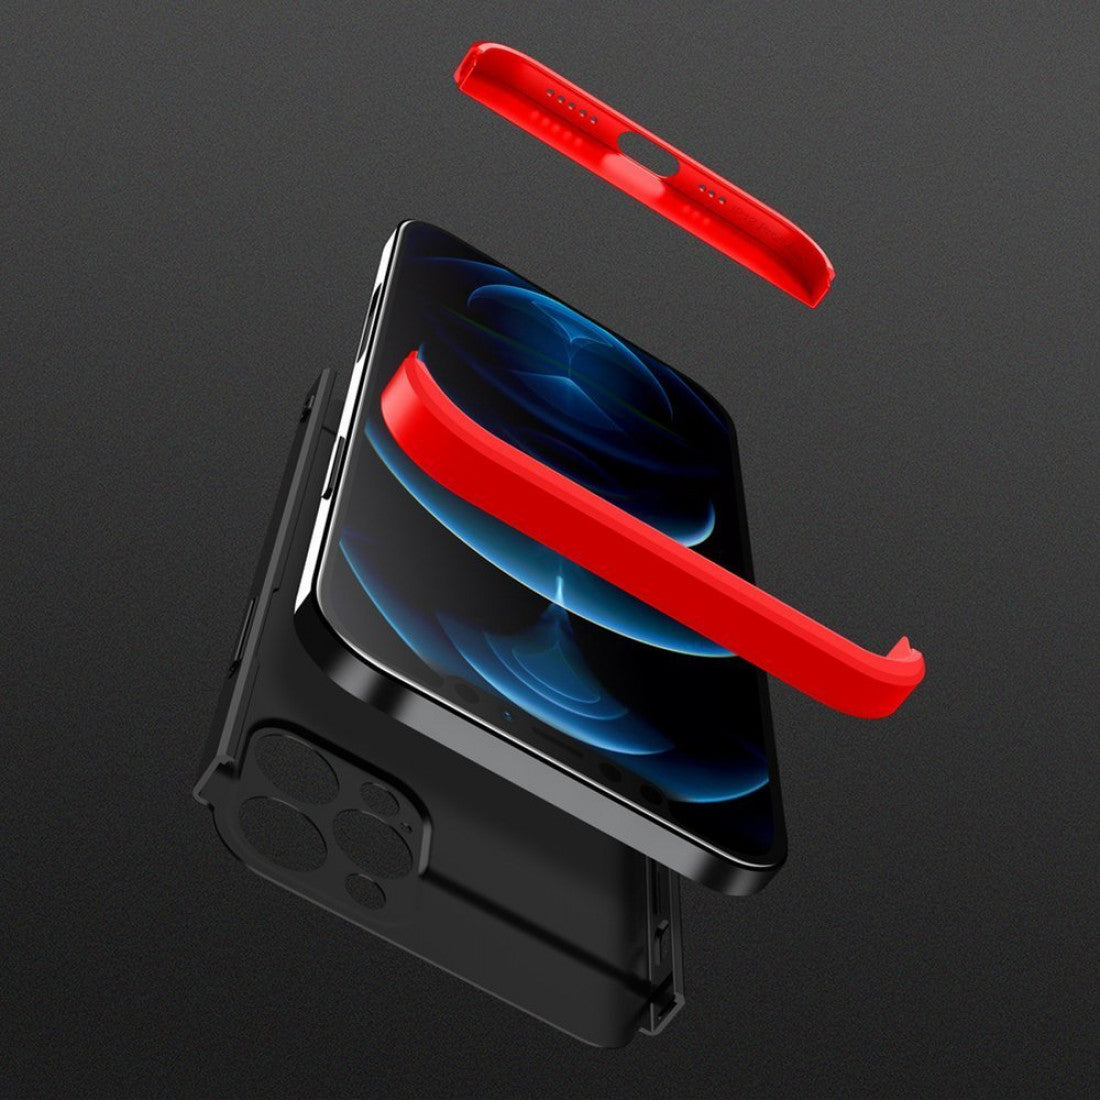 iPhone 12 Pro Case - GKK 360 Full Cover - Black / Red (+Free Screen Glass)